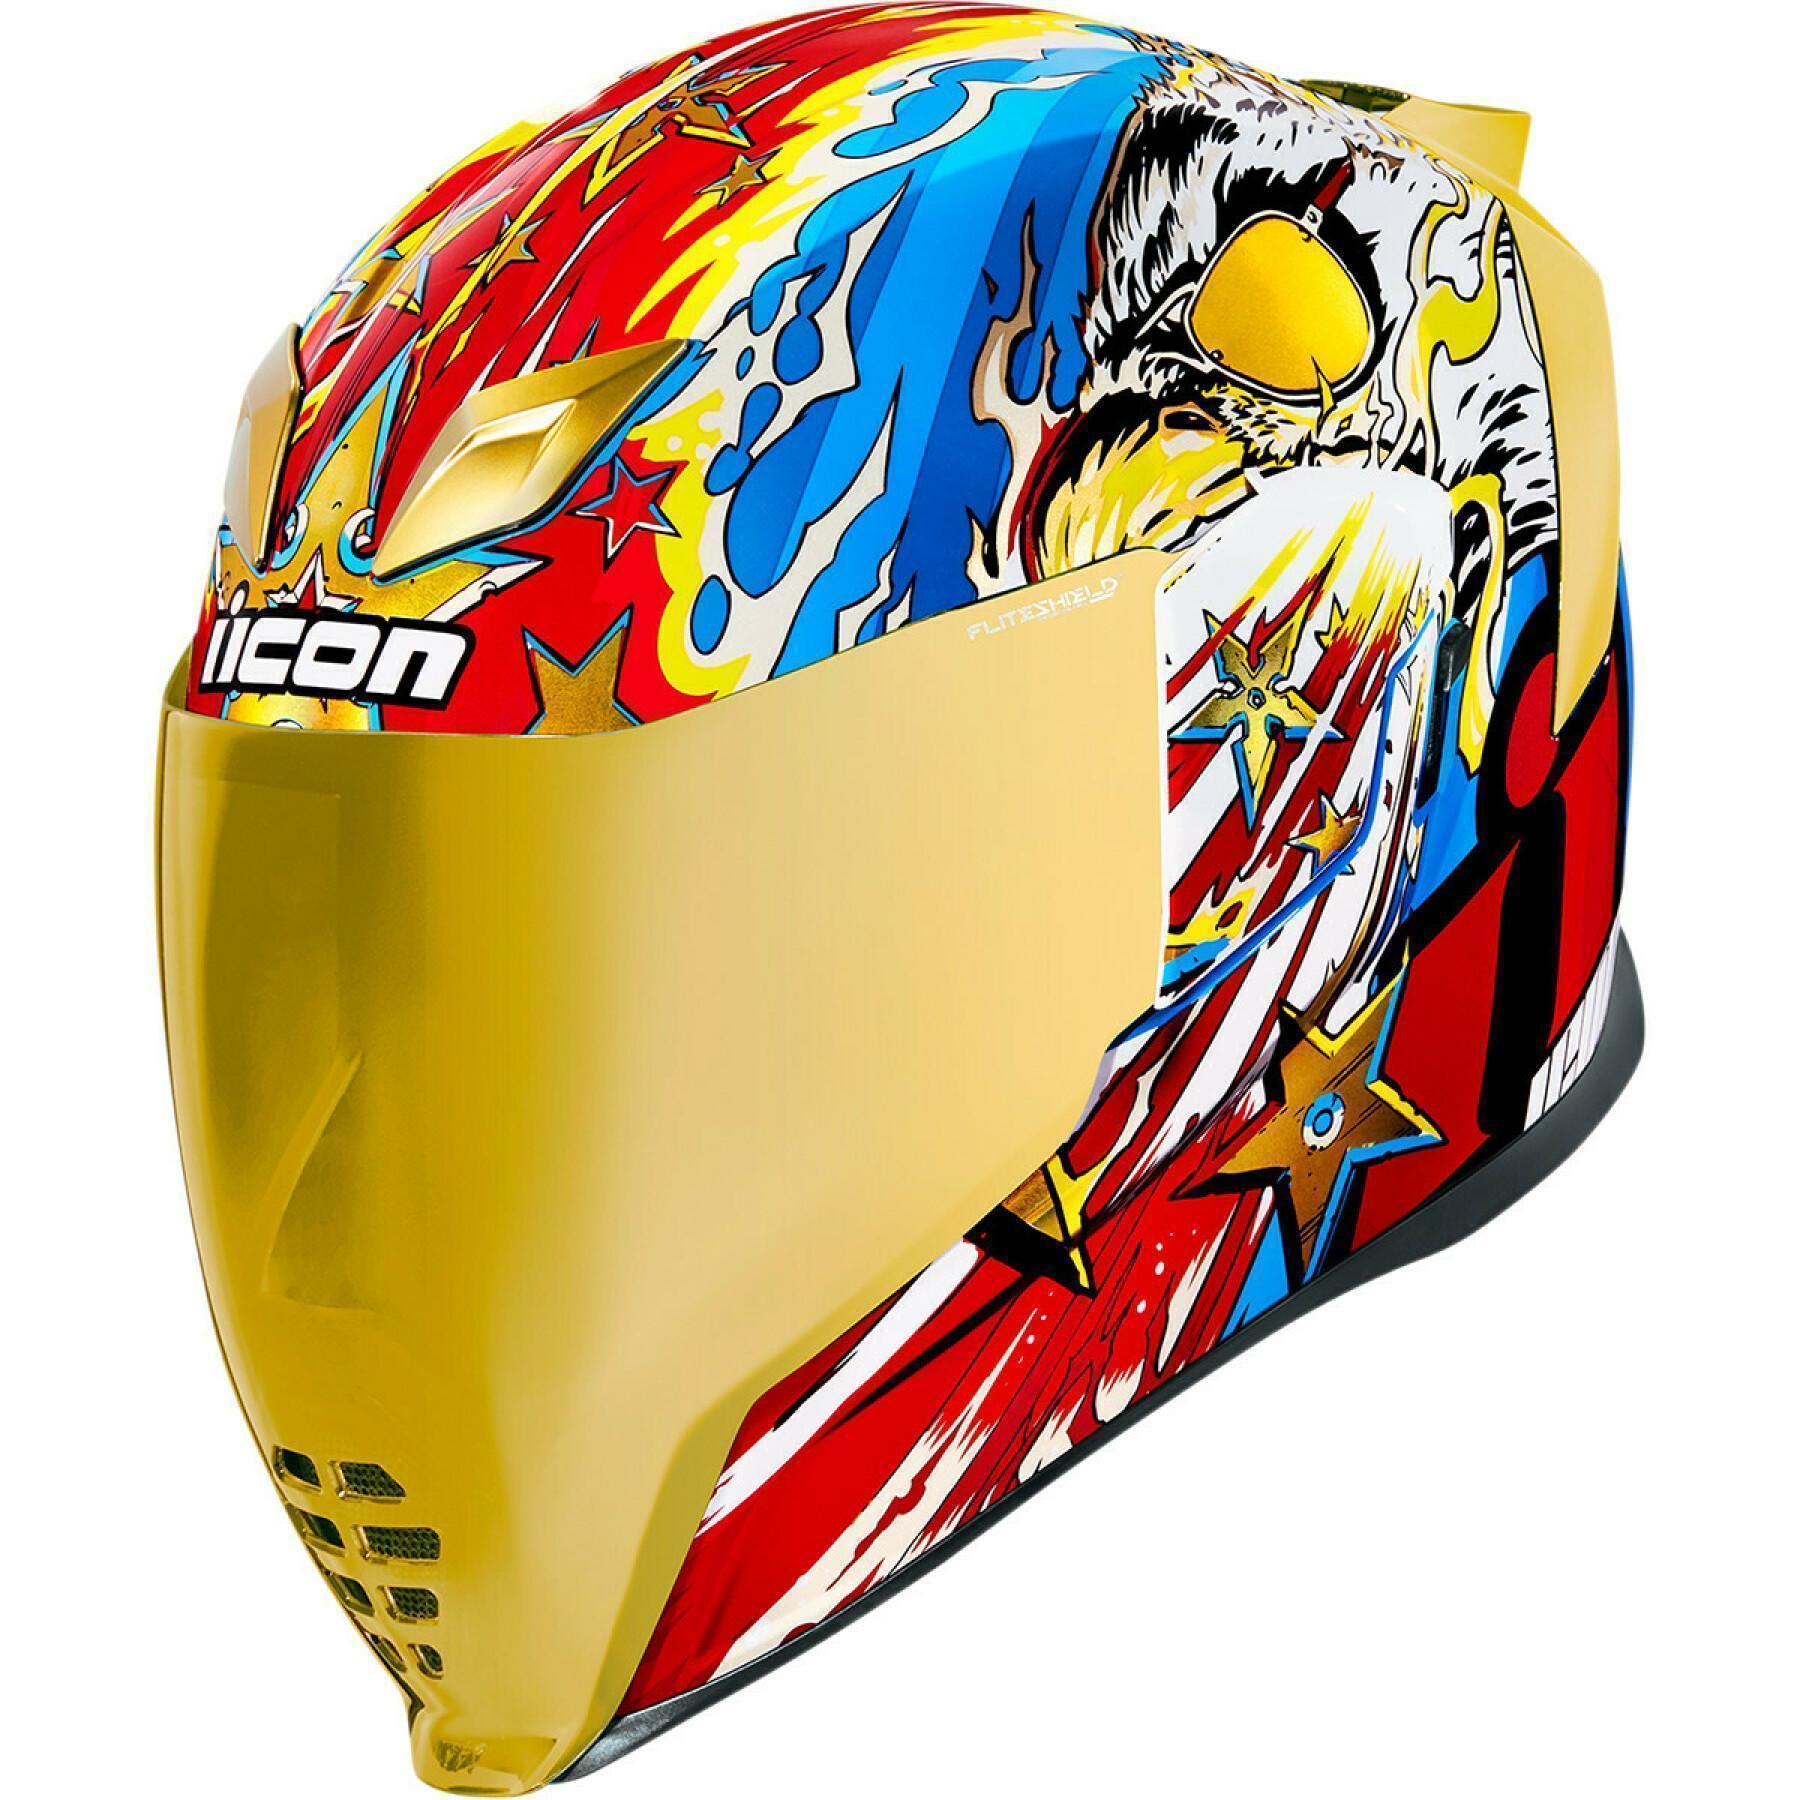 Full face motorcycle helmet Icon aflt freespitr gd